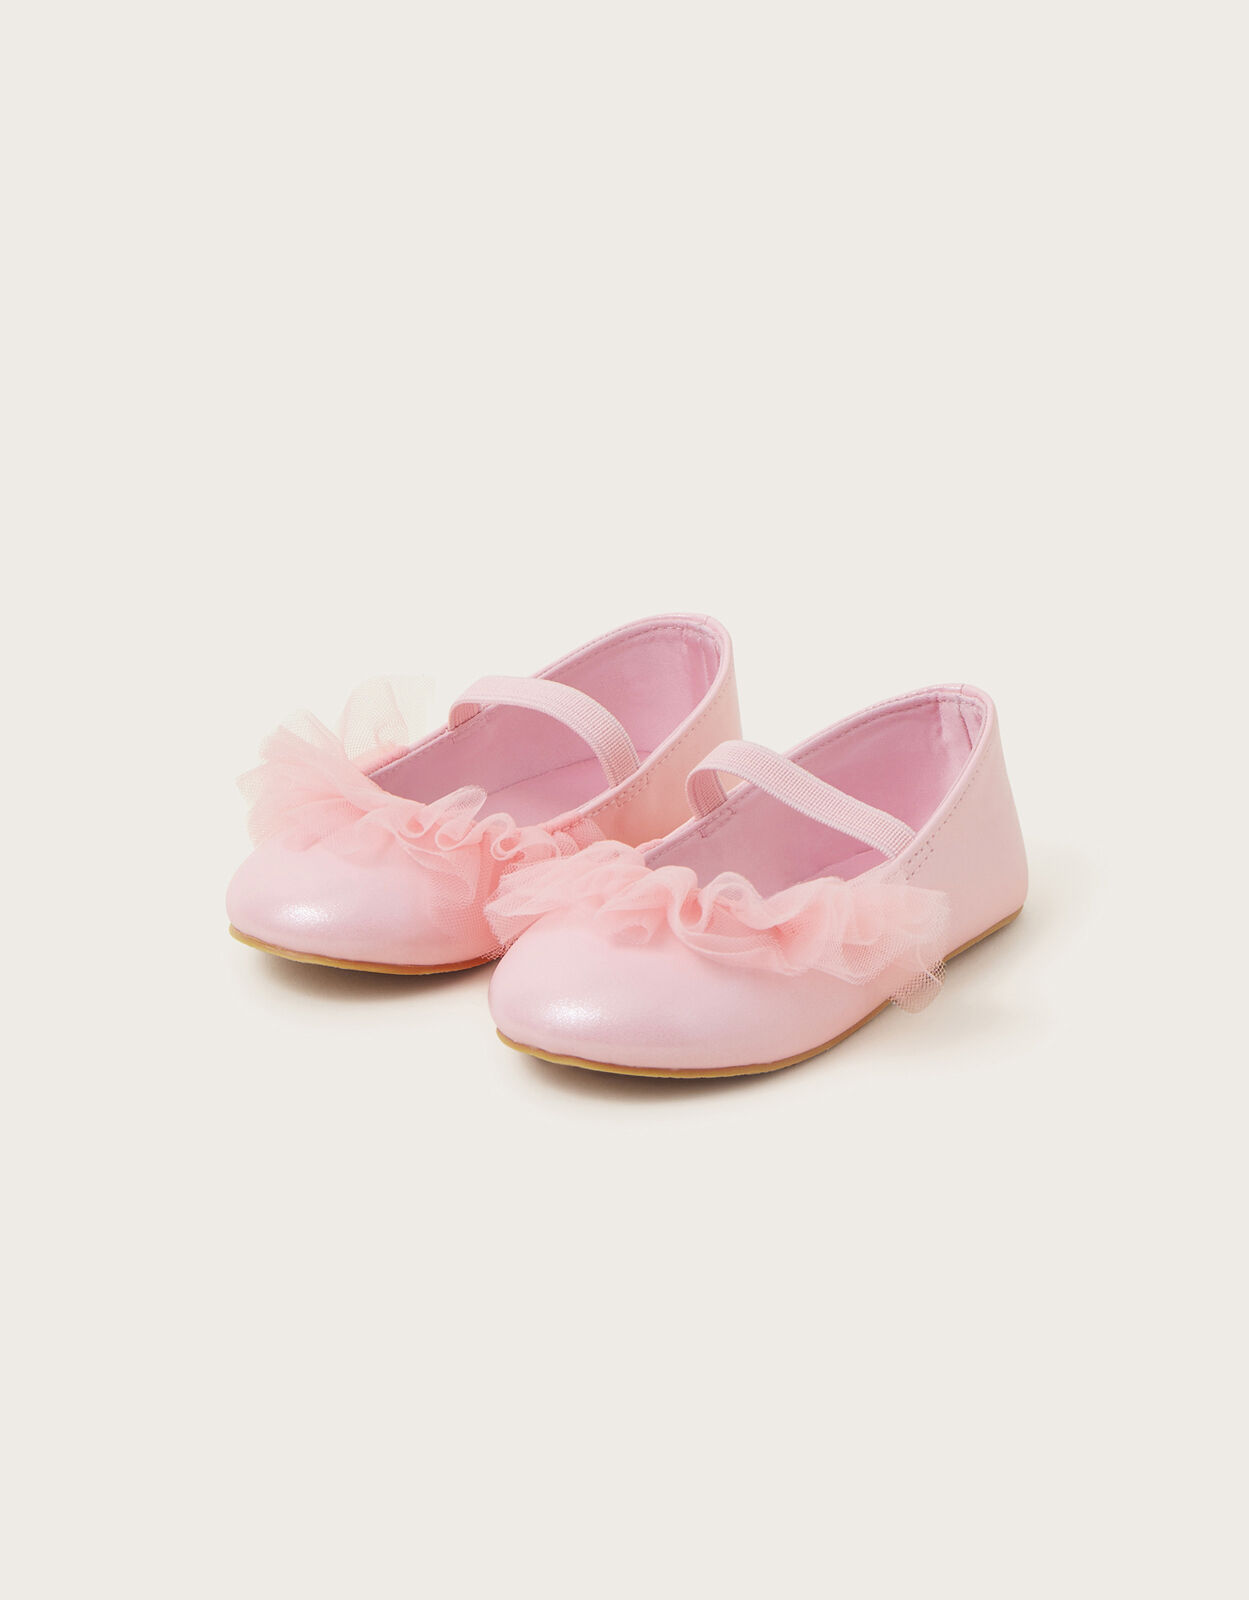 Buy Sherrif Shoes Womens Pink Stiletto Heels Sandals Online